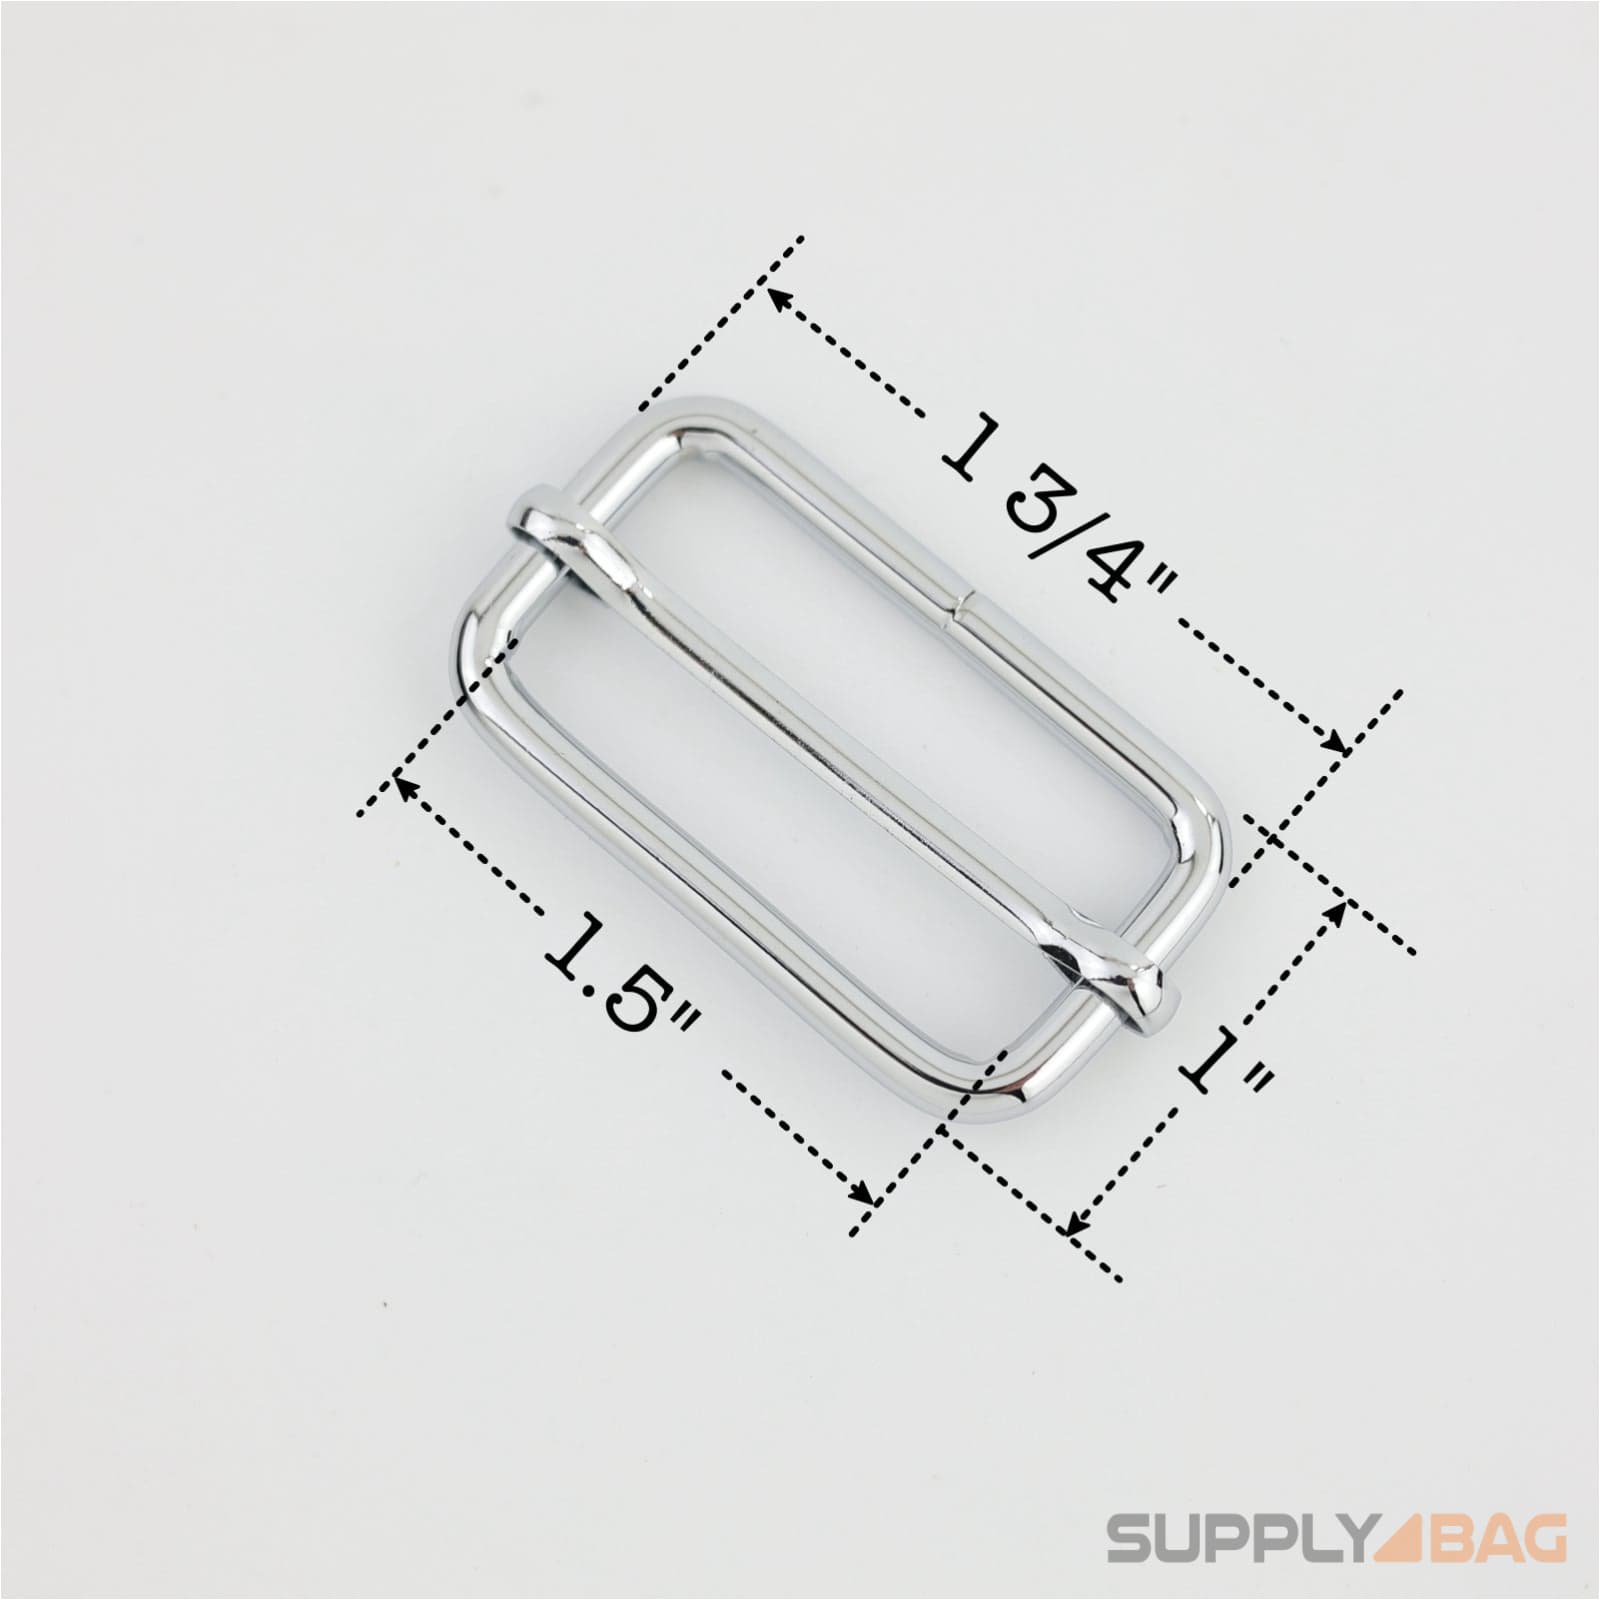 1 1/2 inch Silver Hardware Kit for Bag Strap Making